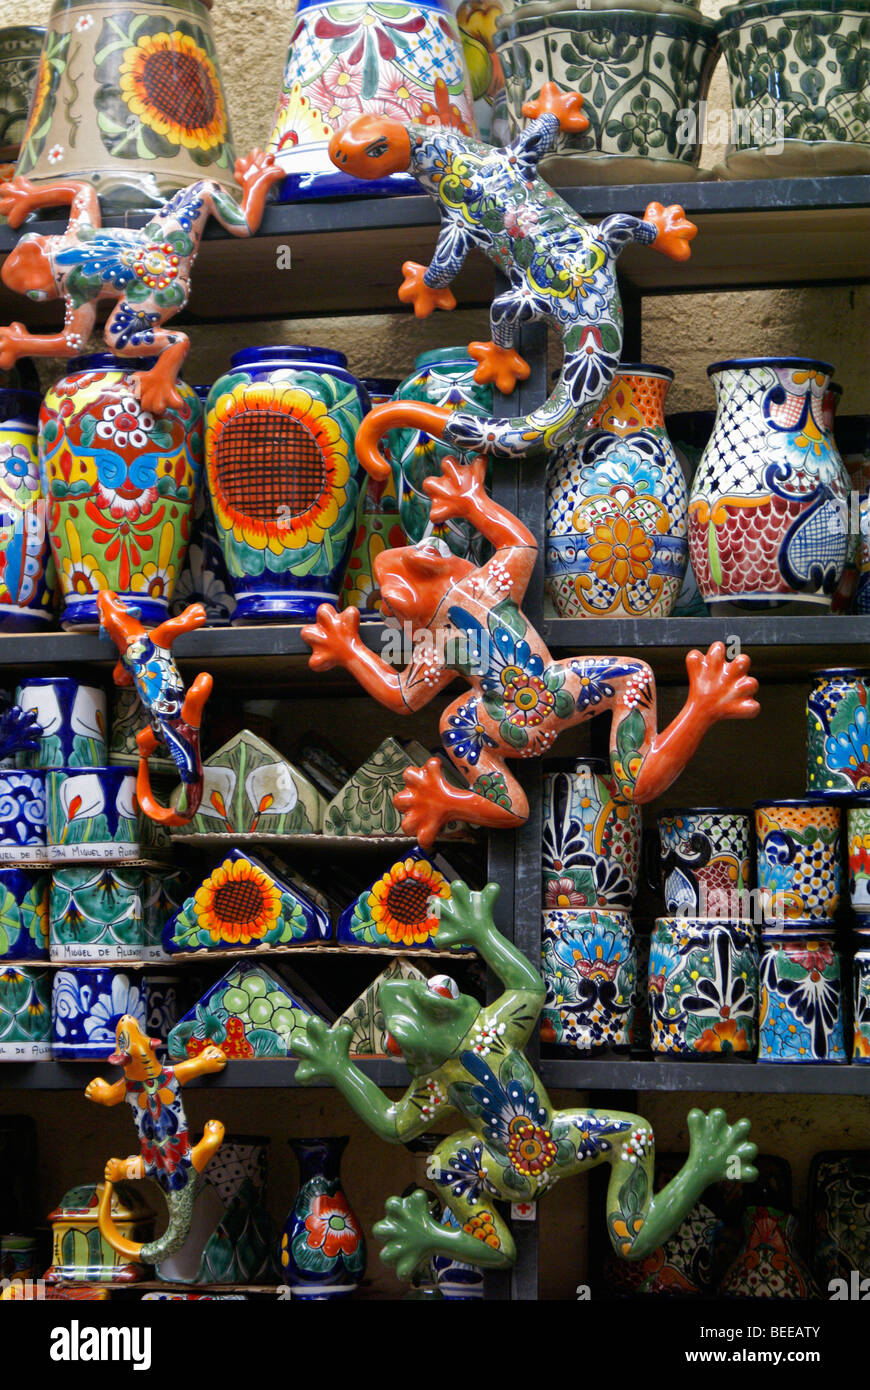 ceramics-for-sale-in-the-market-in-san-m